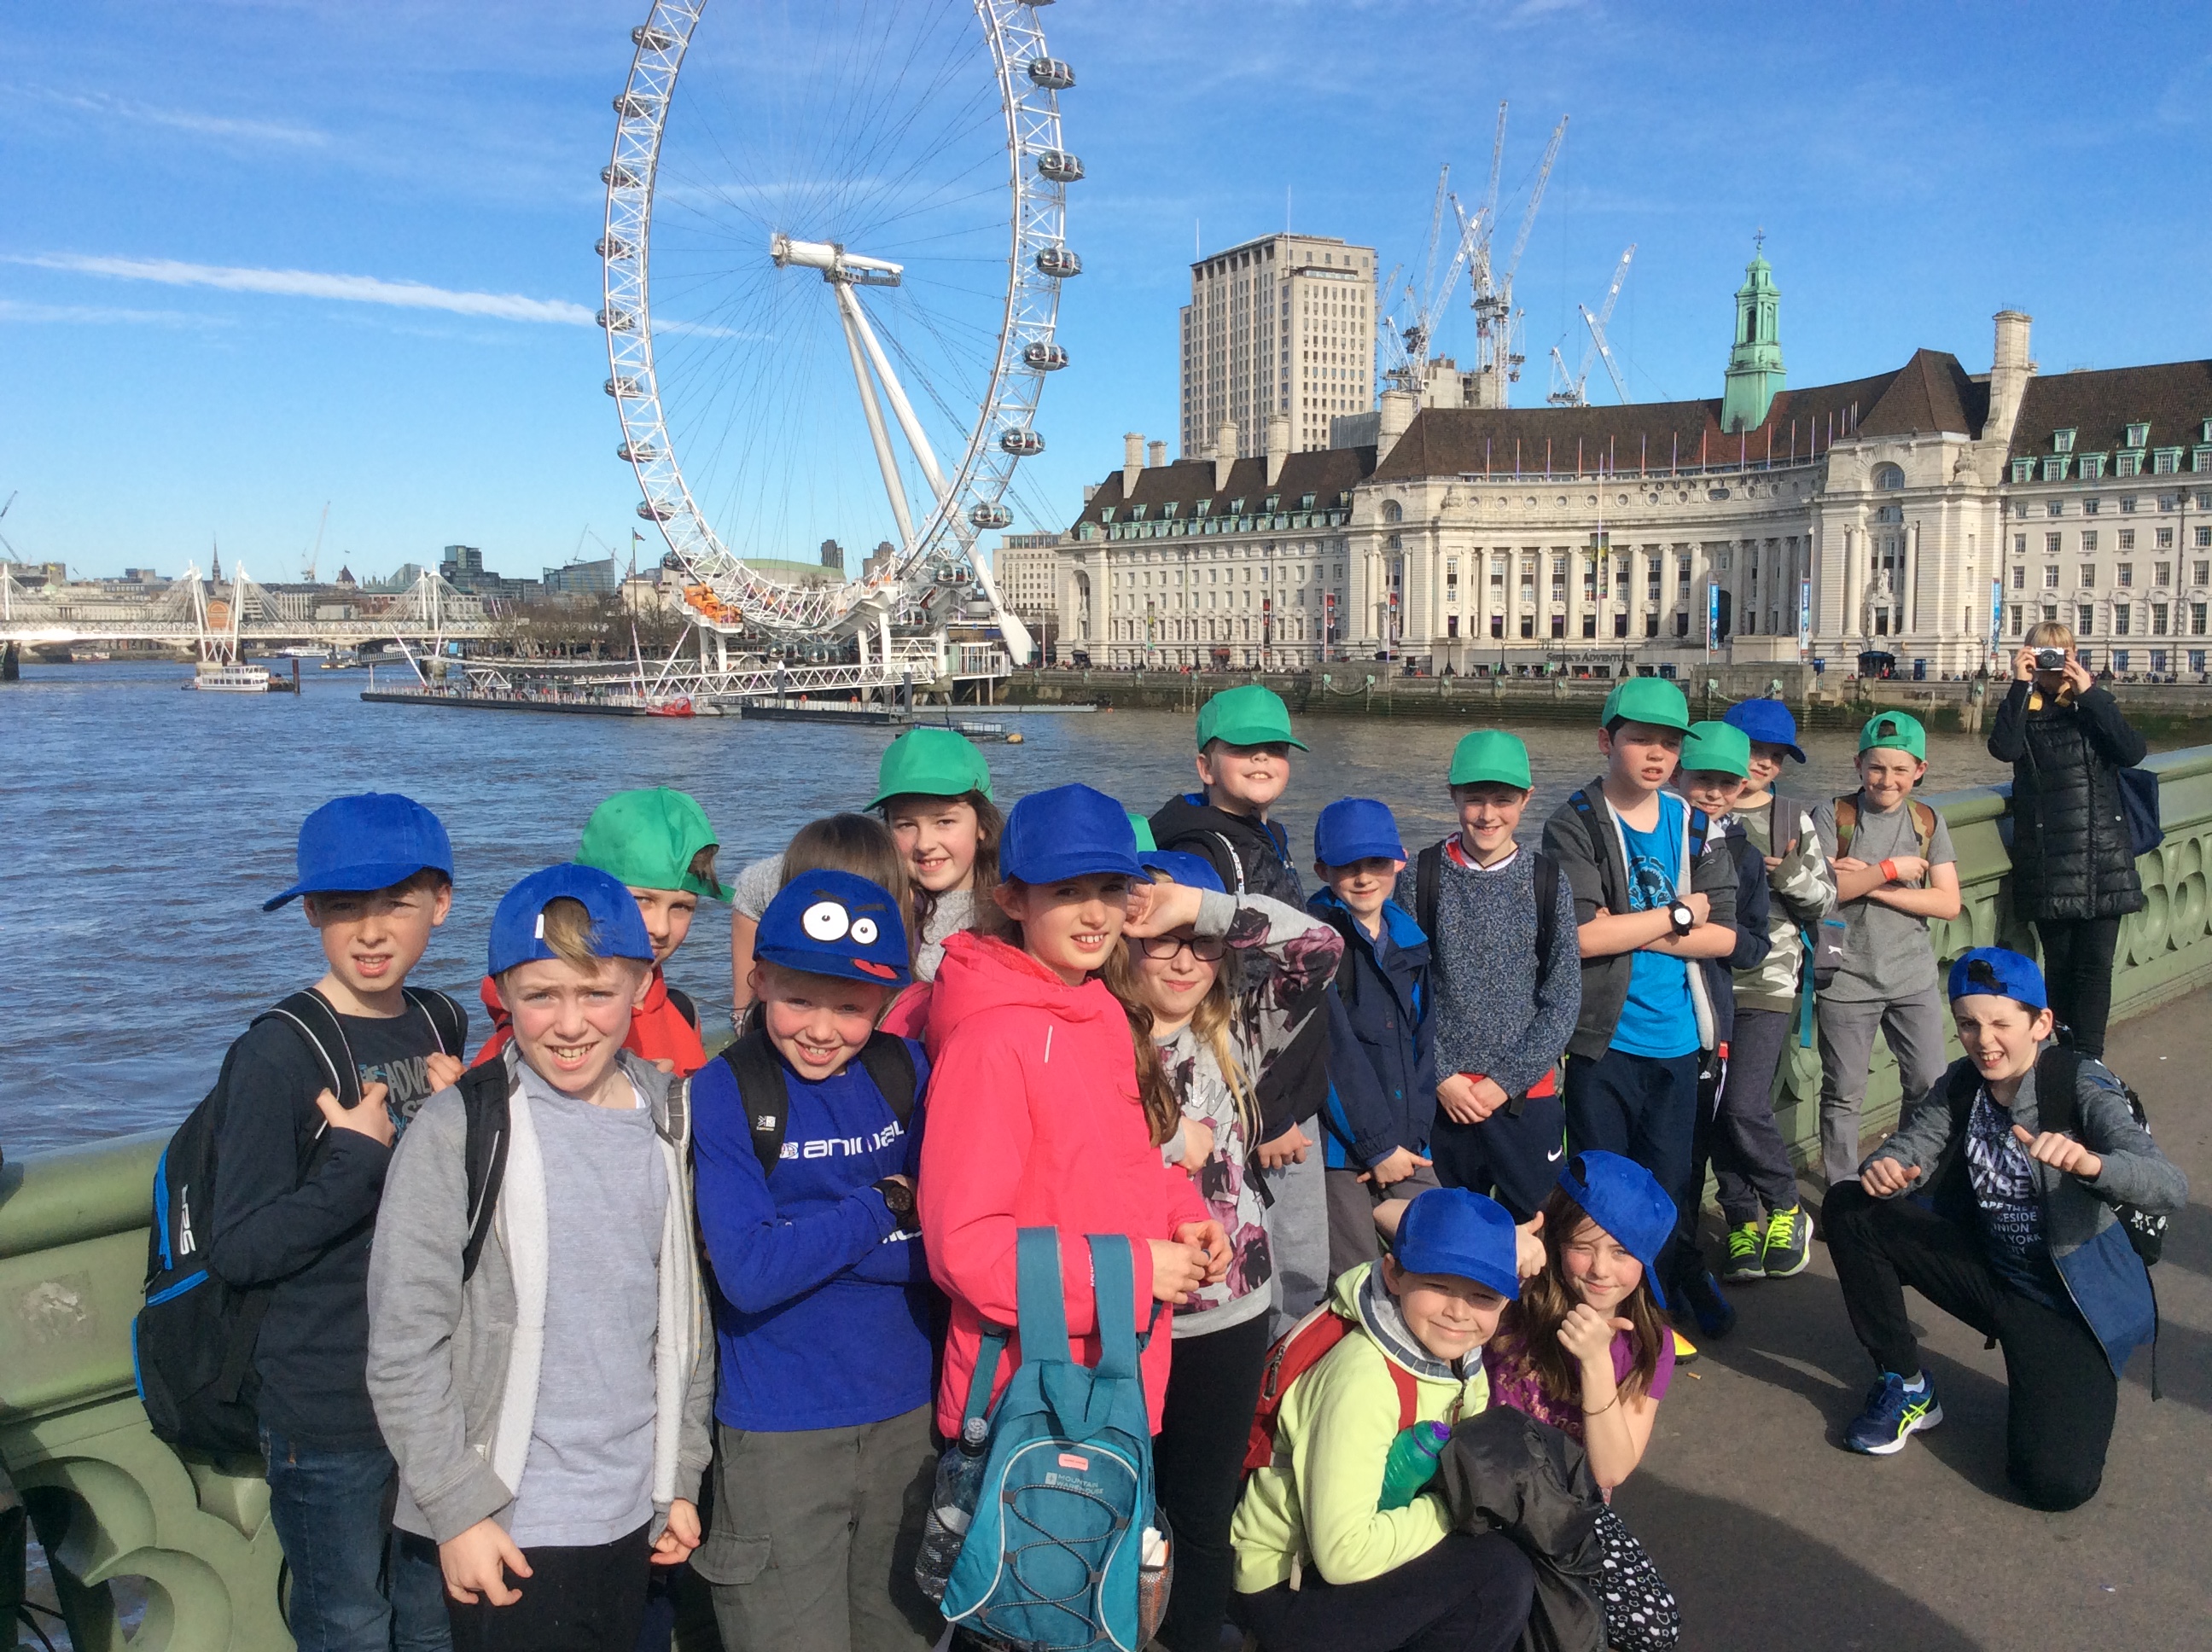 cheap school trips london